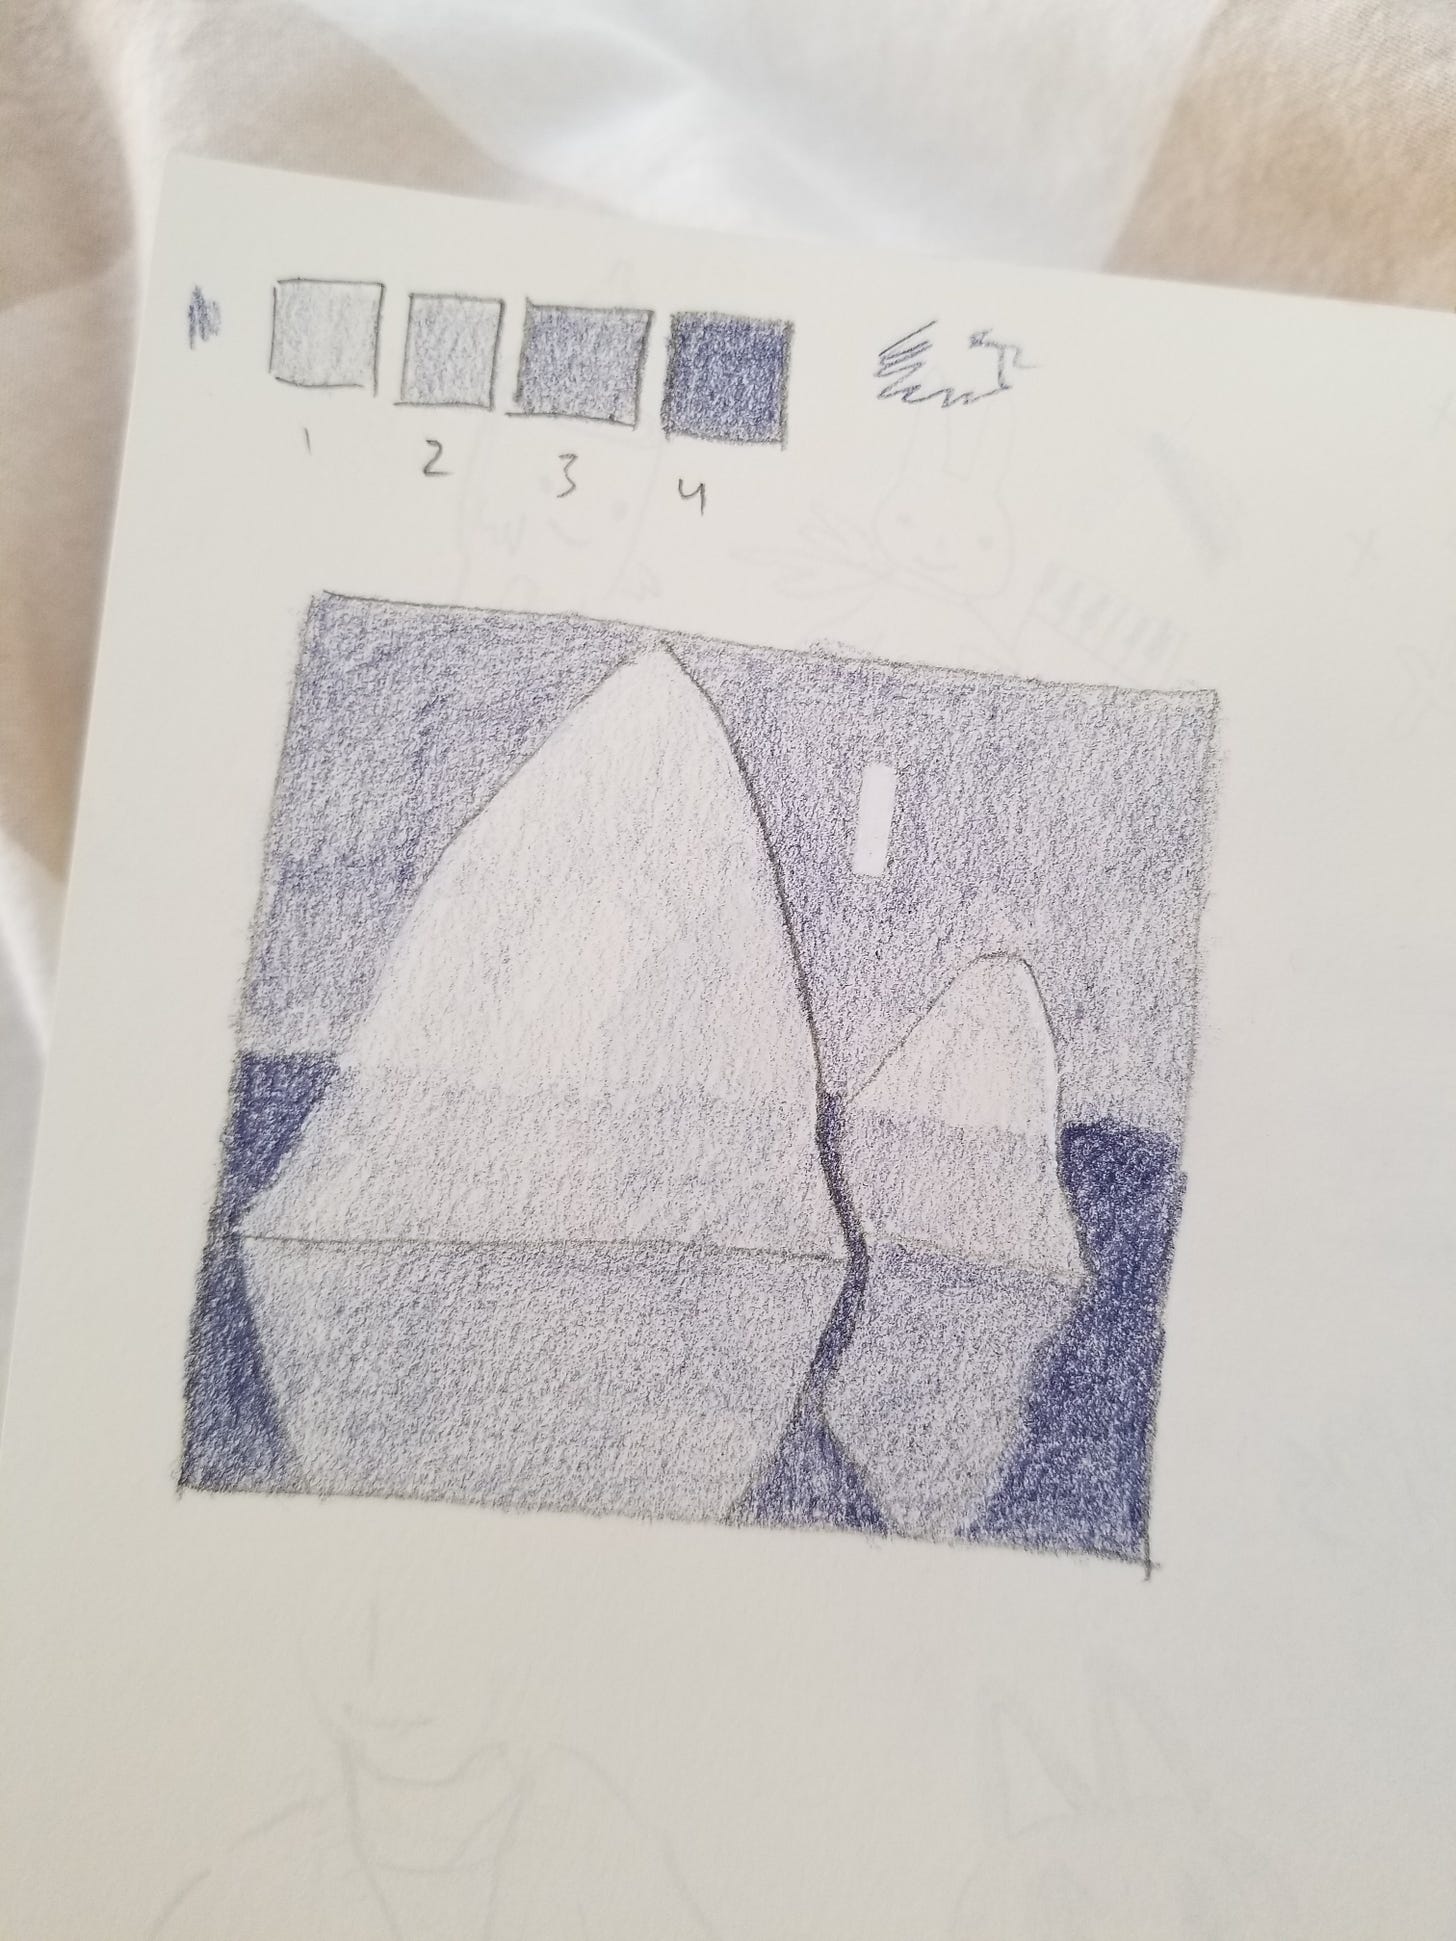 pencil crayon drawing of matthew wong's icebergs.